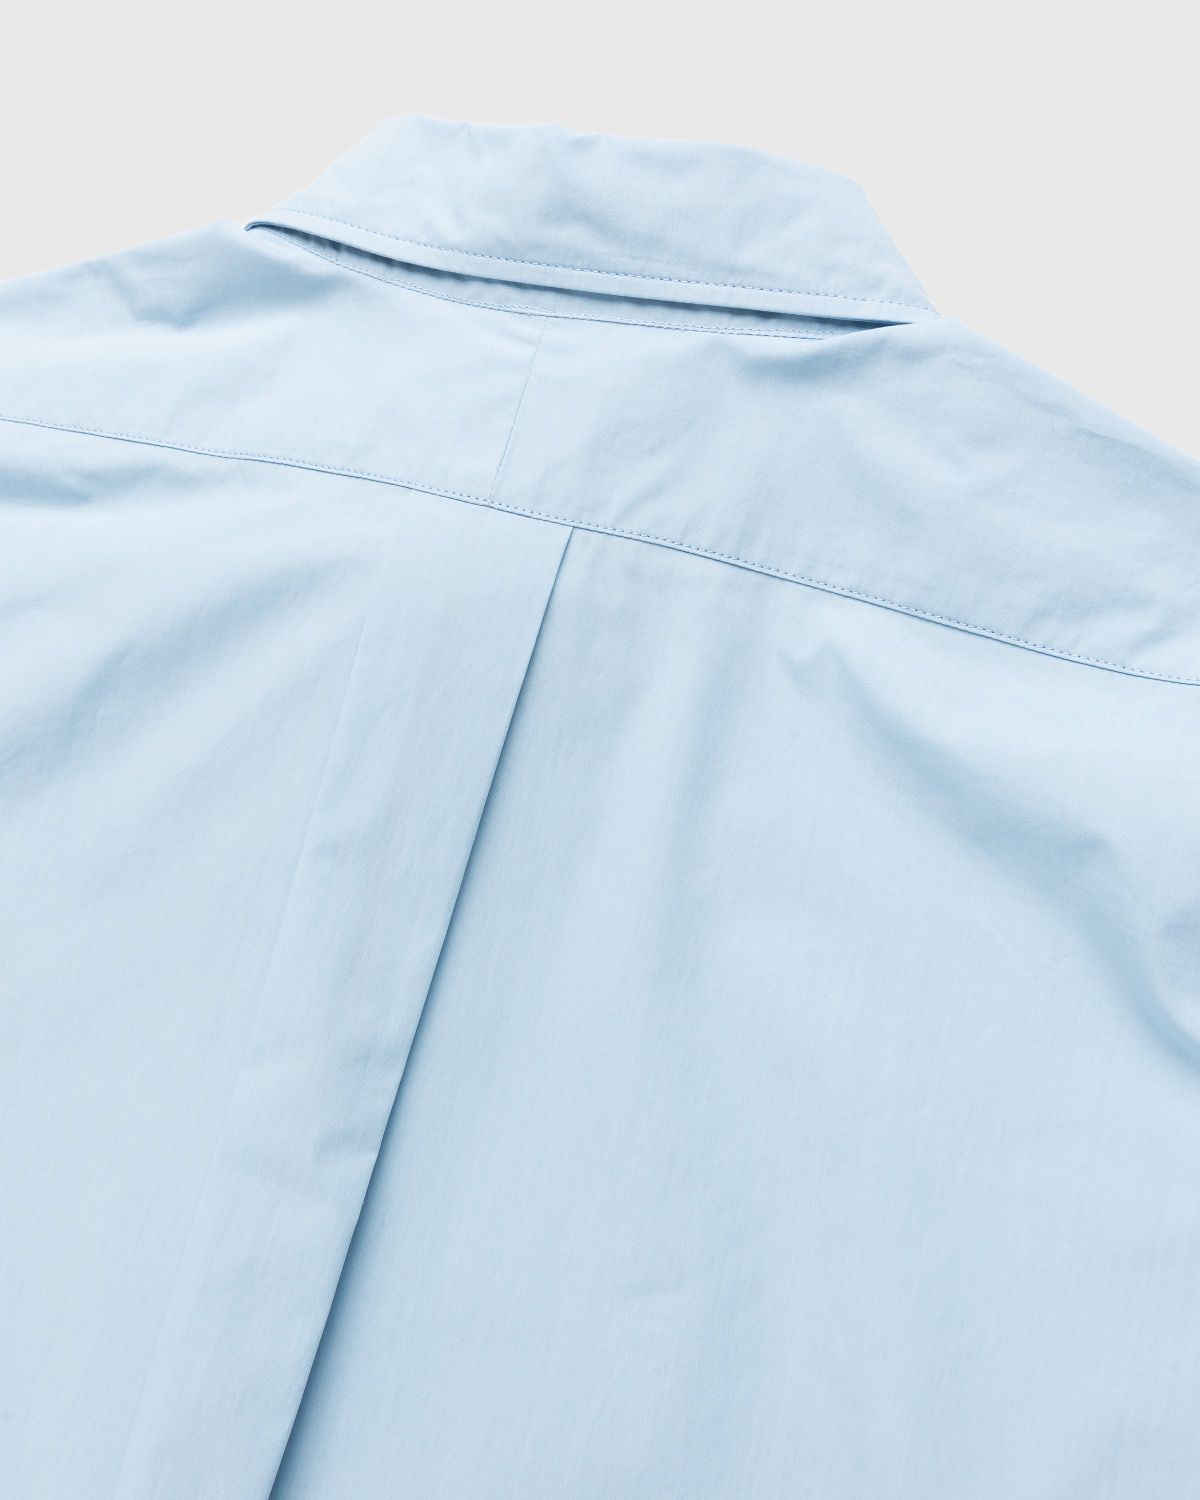 Kenzo – Shirt Sky Blue - Longsleeve Shirts - Blue - Image 3